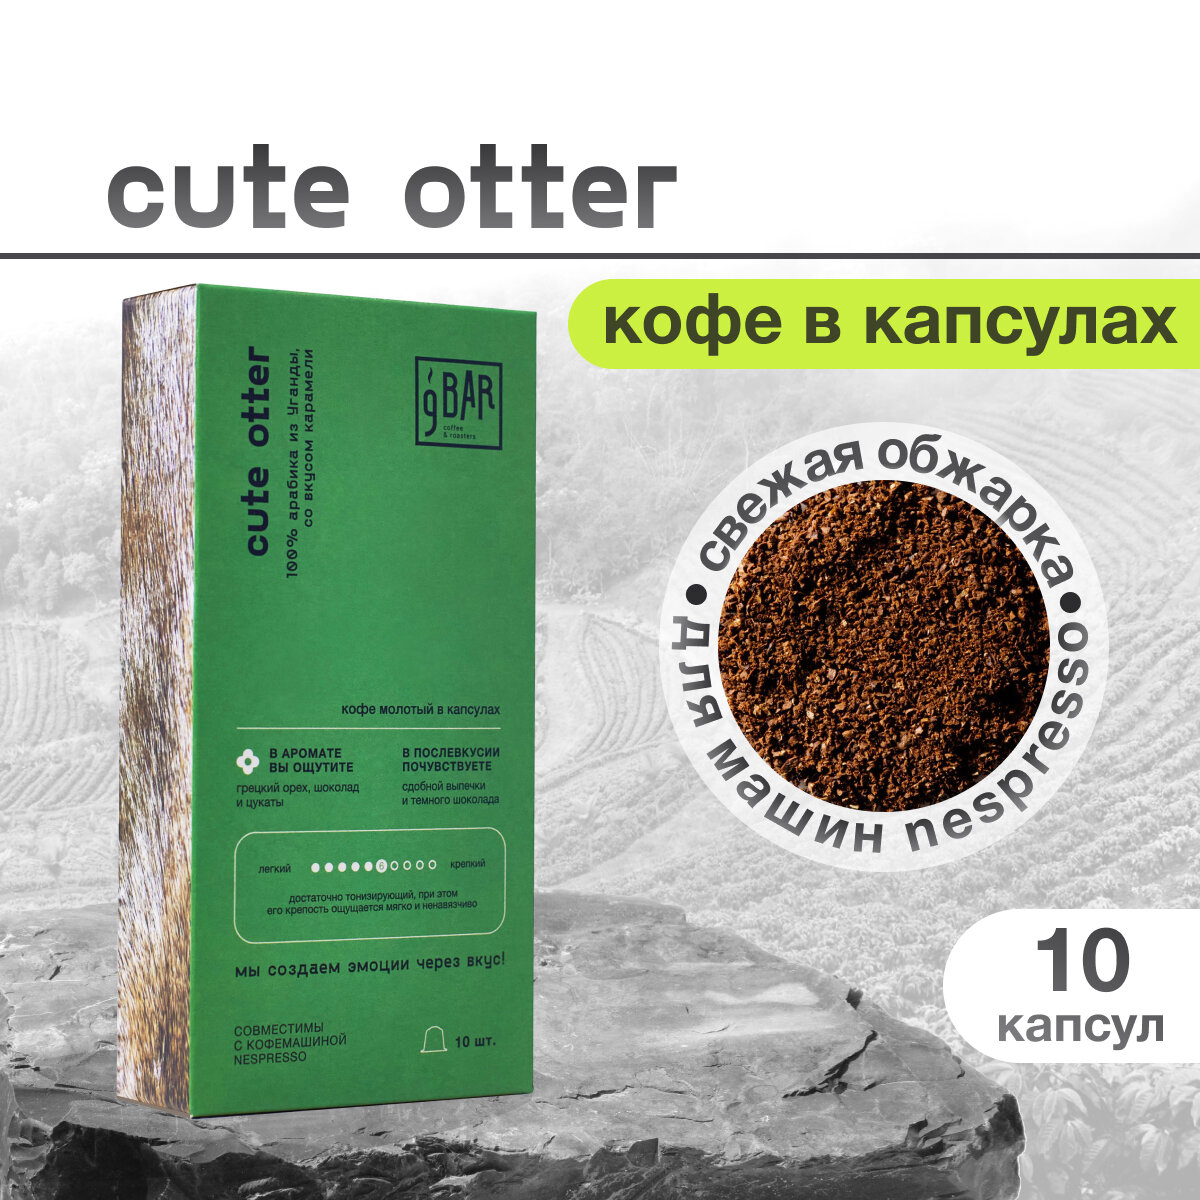 Кофе в капсулах 9 BAR coffee & roasters Уганда Cute Otter, карамель, свежеобжаренный, арабика 100%, 10 шт. - фотография № 1